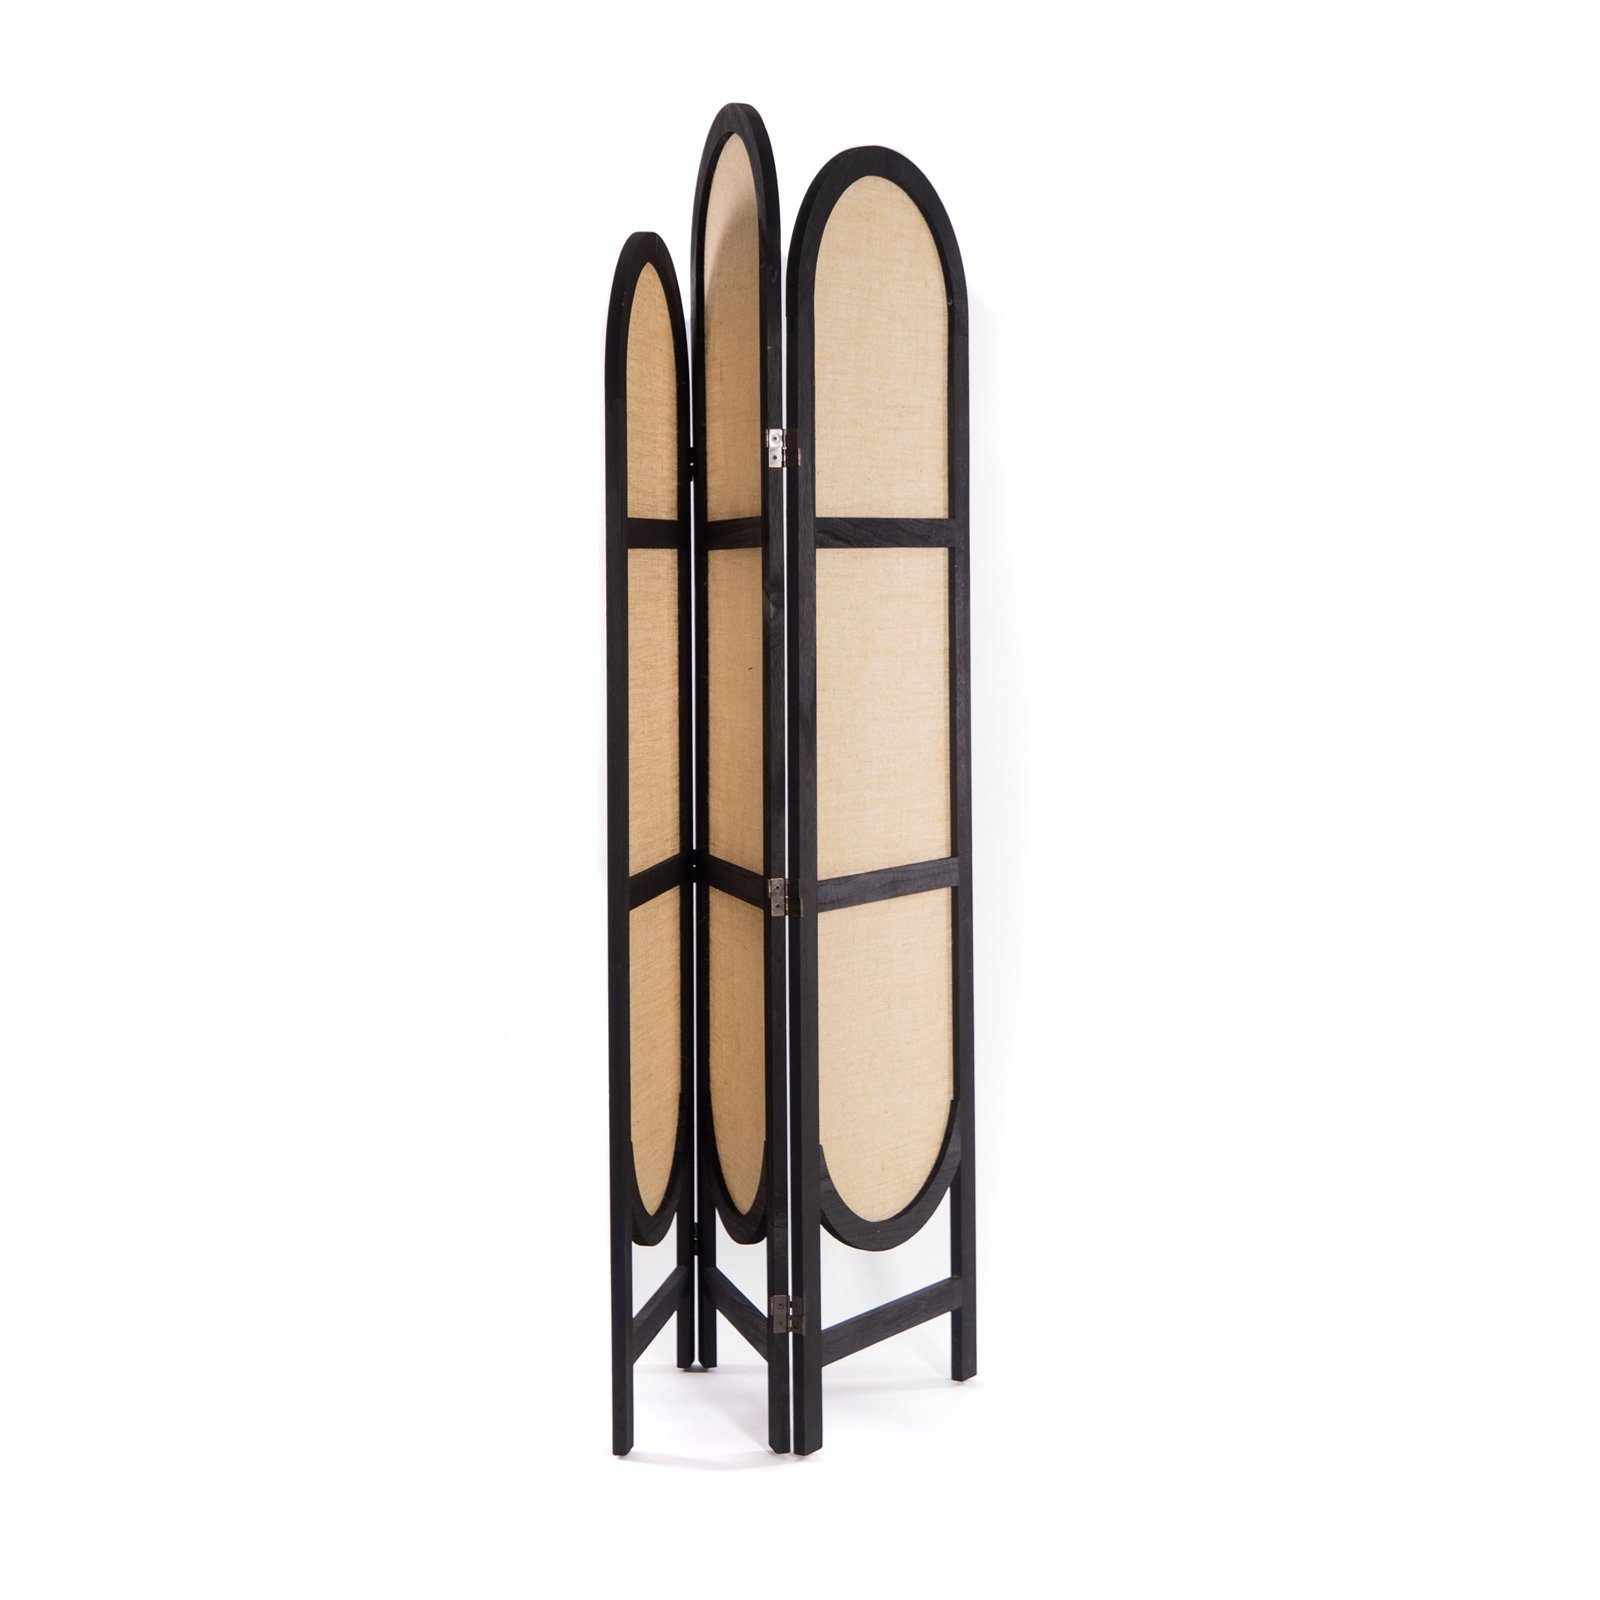 CREEDWOOD Paravent RAUMTEILER "ARCO", 170 Farbe: Sichtschutz, Paravent, schwarz-natur sc Leinen, cm